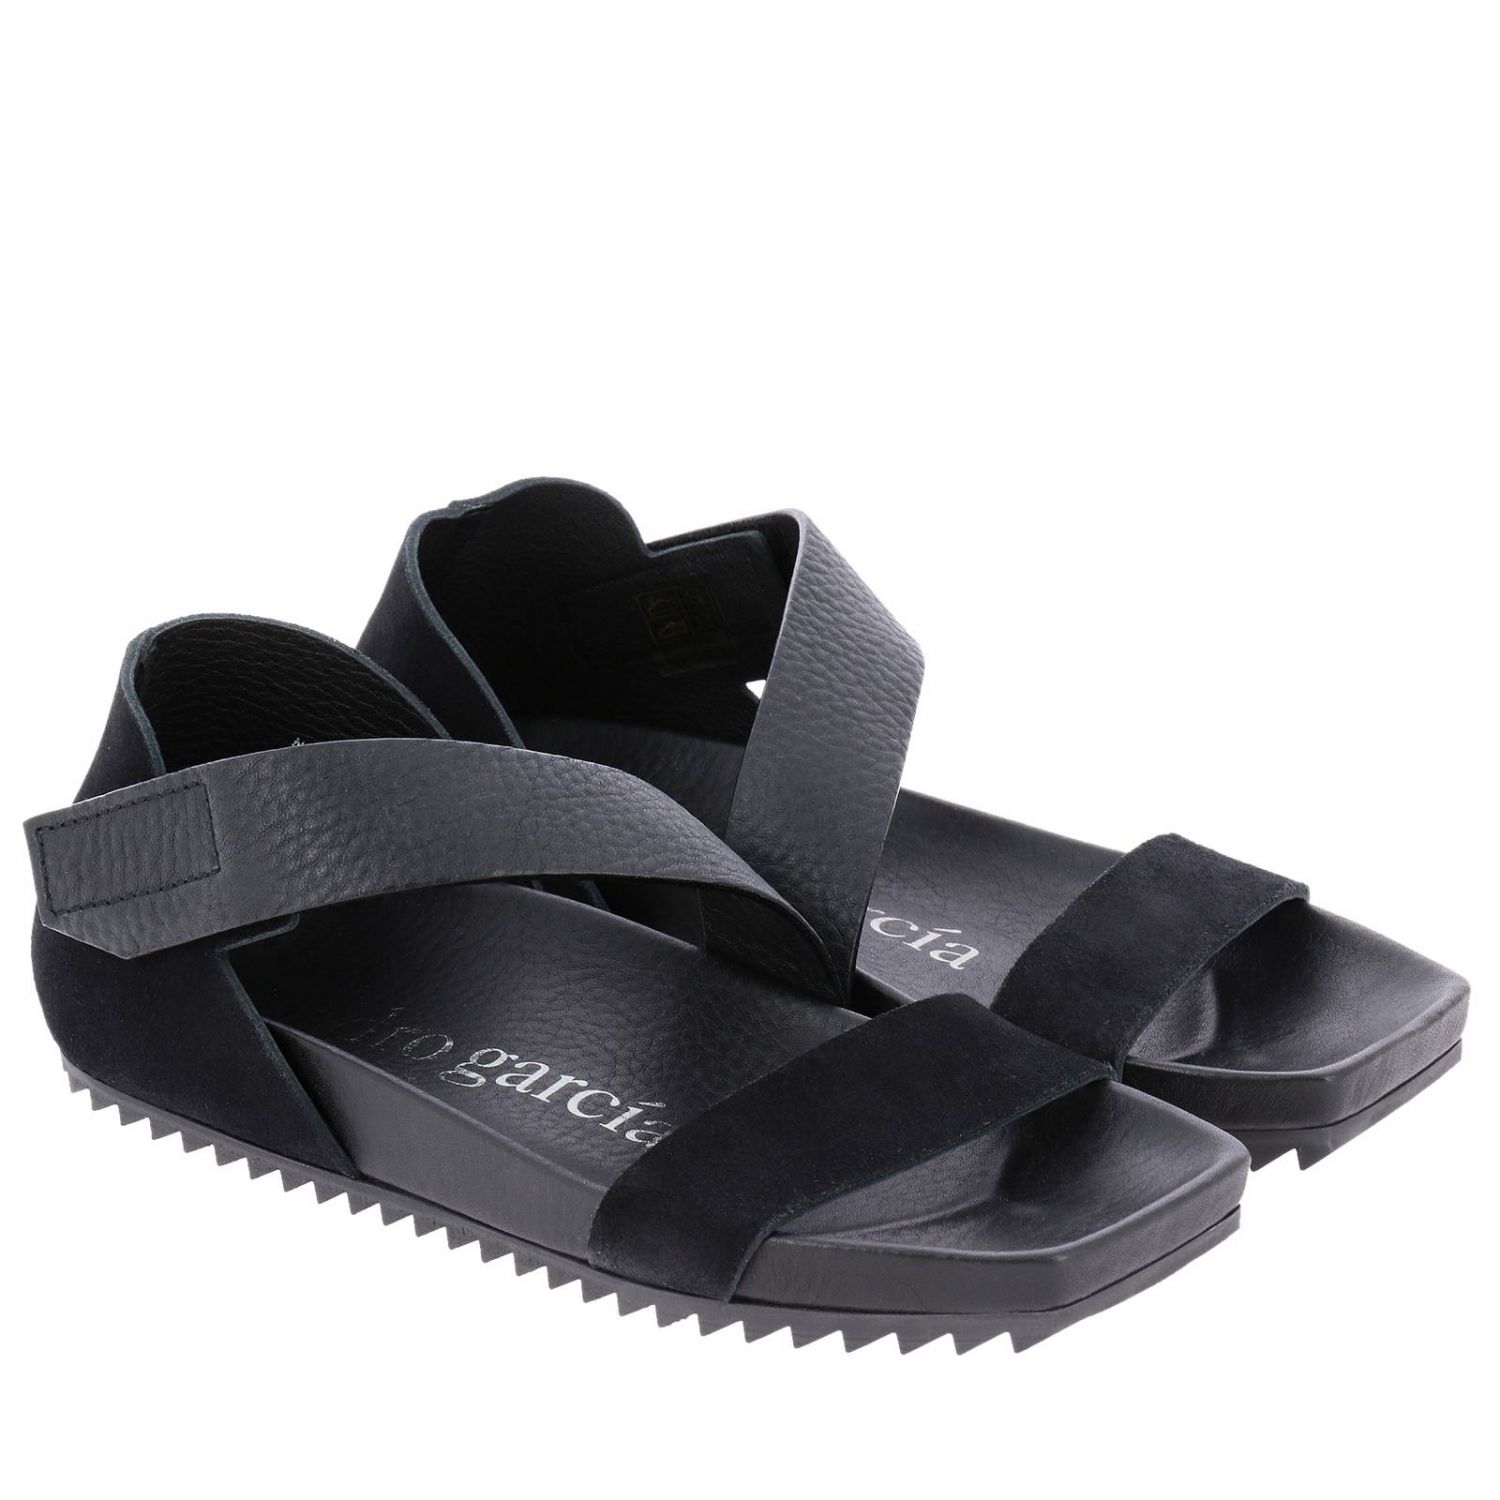 Pedro Garcia Outlet: Shoes women - Black | Flat Sandals Pedro Garcia ...